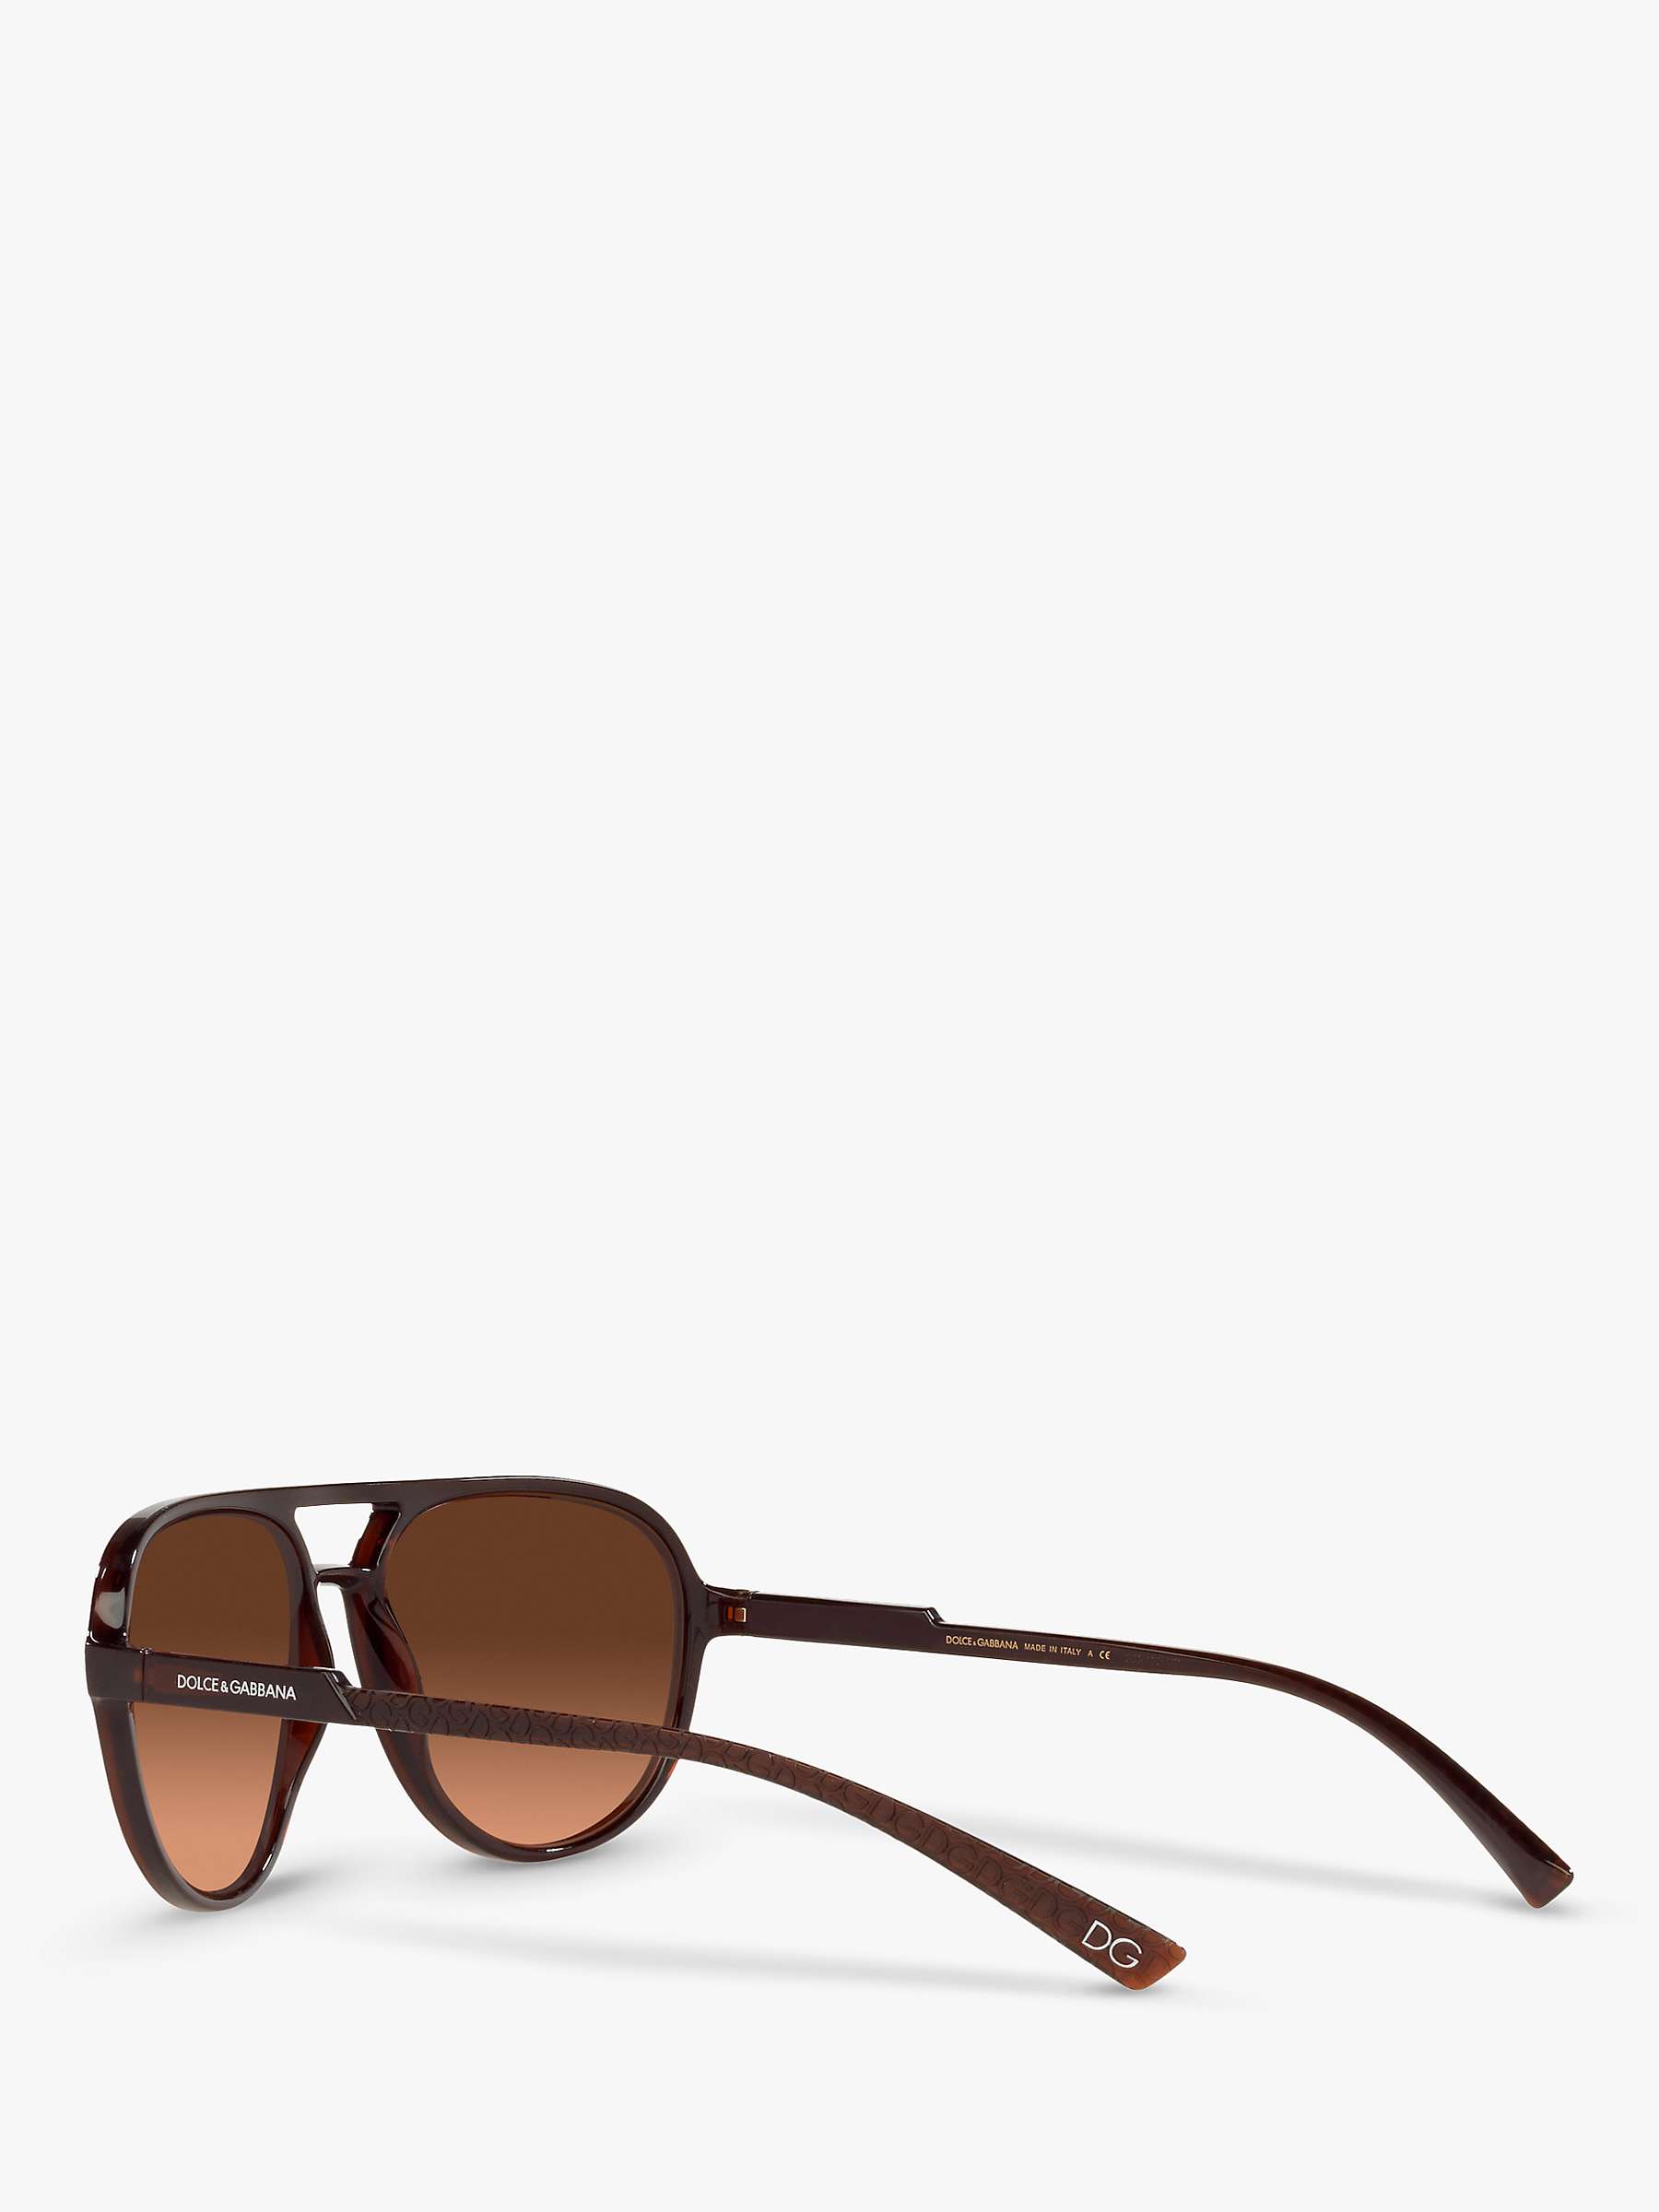 Buy Dolce & Gabbana DG6150 Men's Aviator Sunglasses, Matte Brown/Brown Gradient Online at johnlewis.com